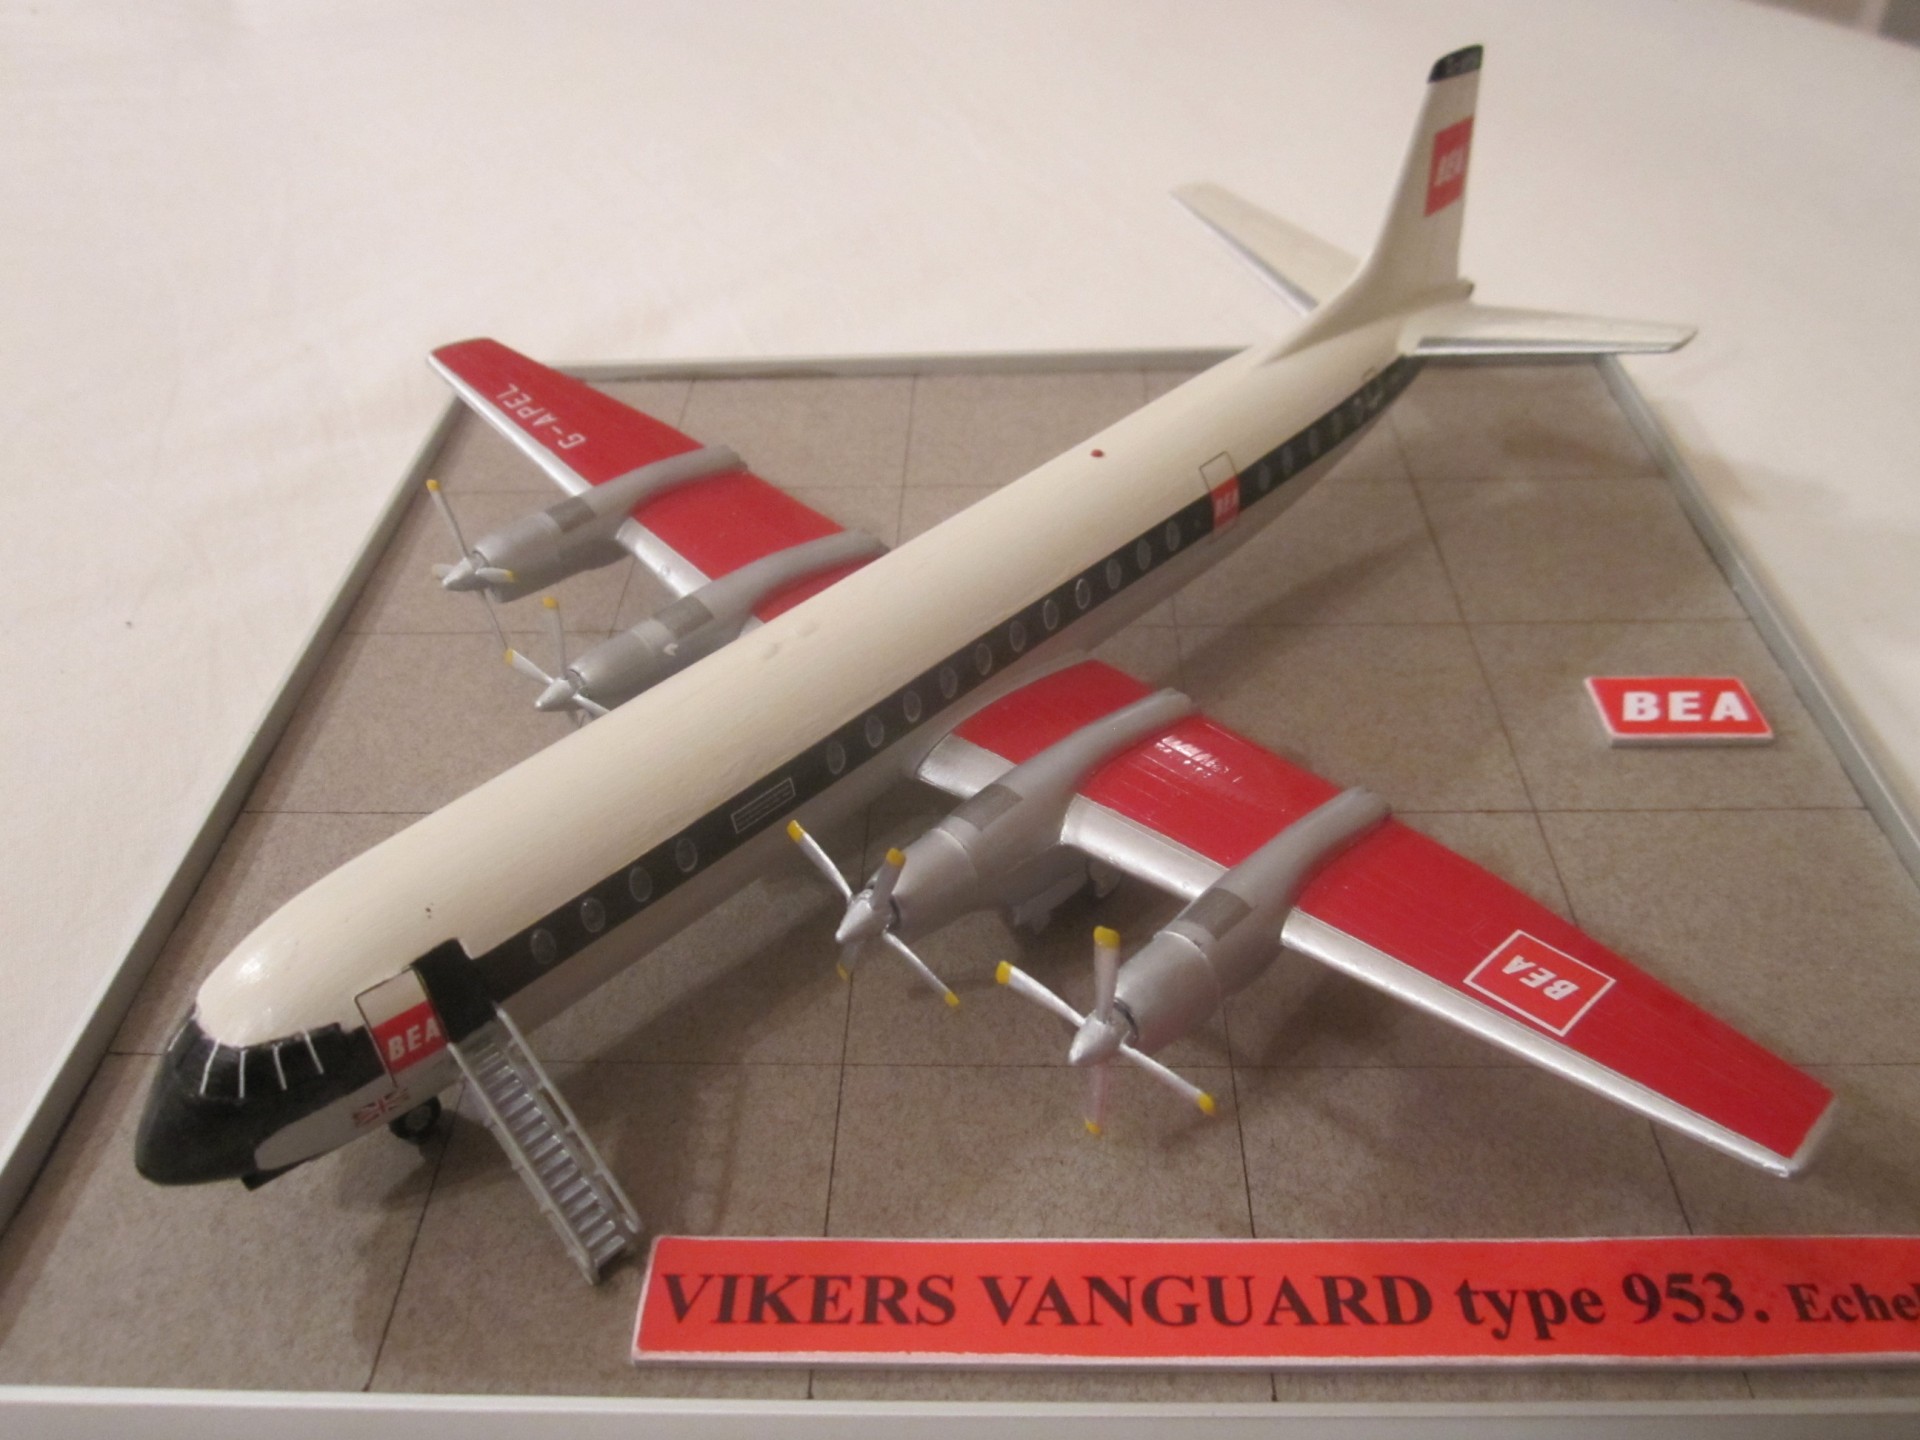 Vickers vanguard 953 